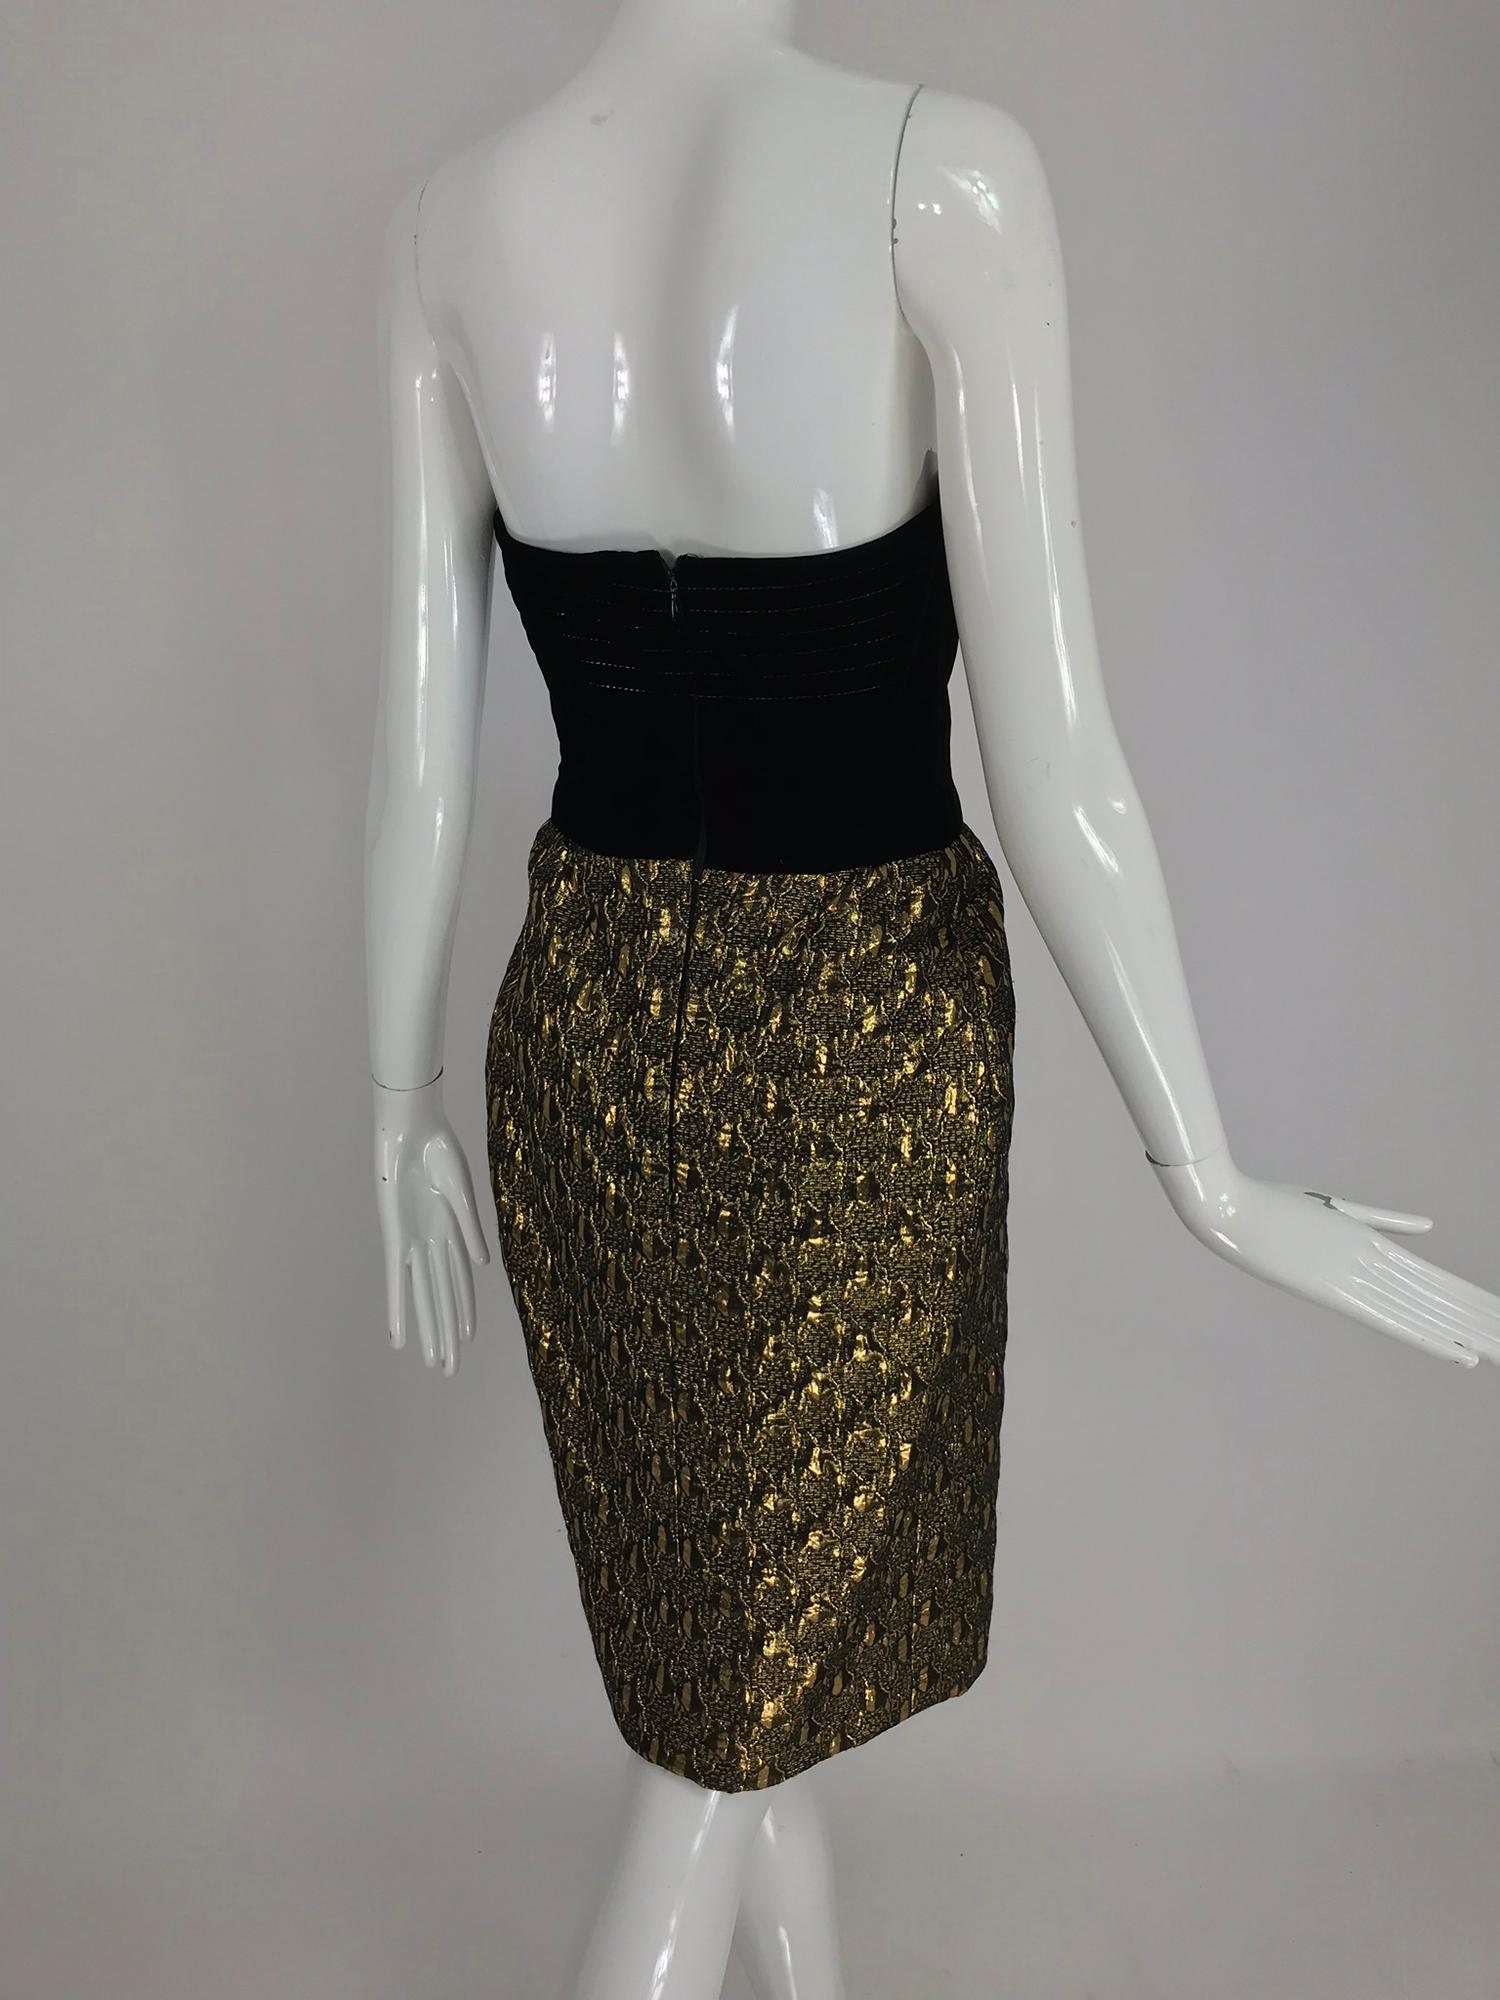 Jacqueline de Ribes gold metallic and black velvet strapless cocktail dress  2